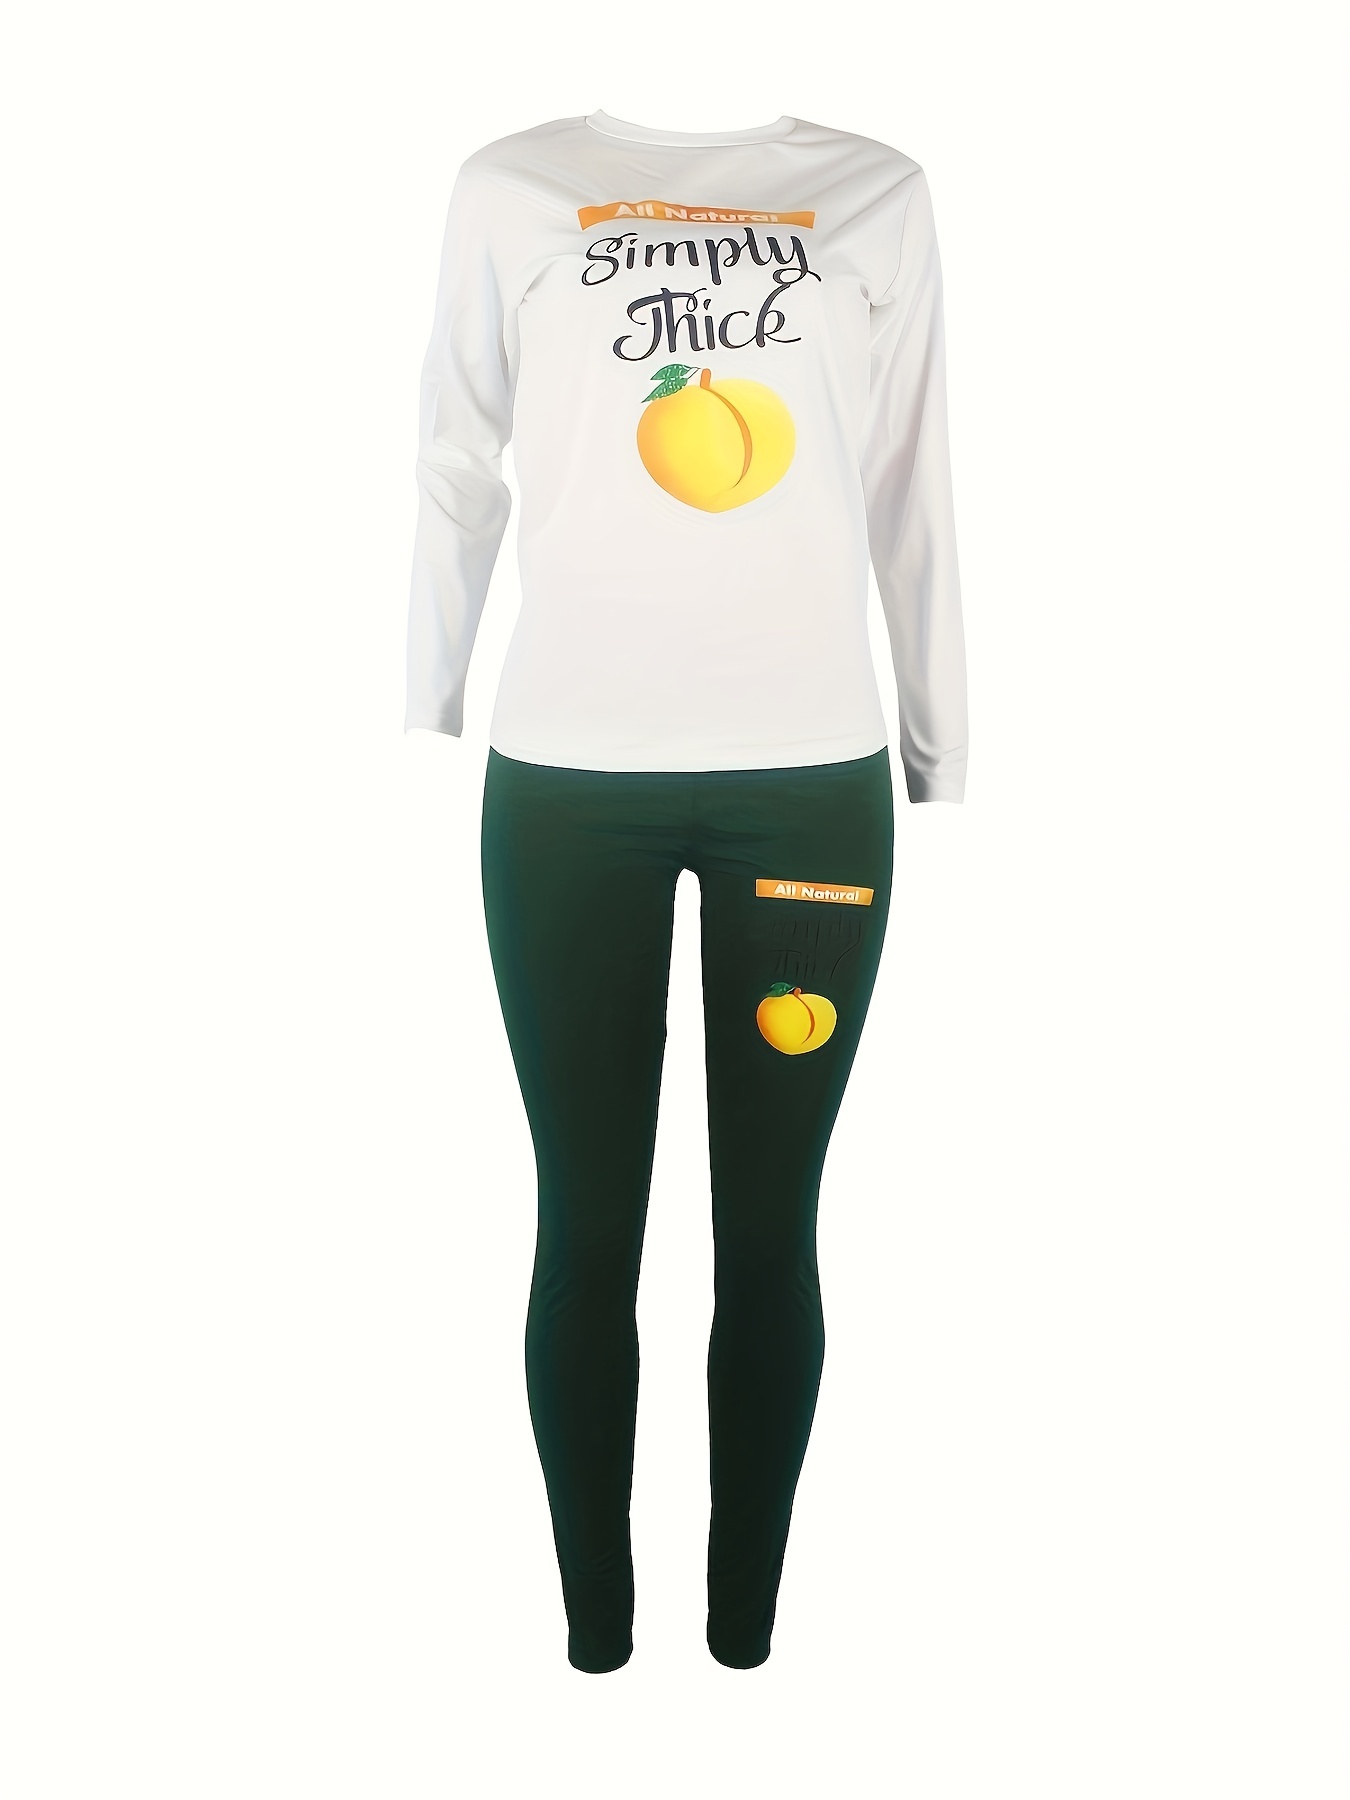 Lemon Printed Yoga Pants Fruit Pattern Green Yellow Leggings Women